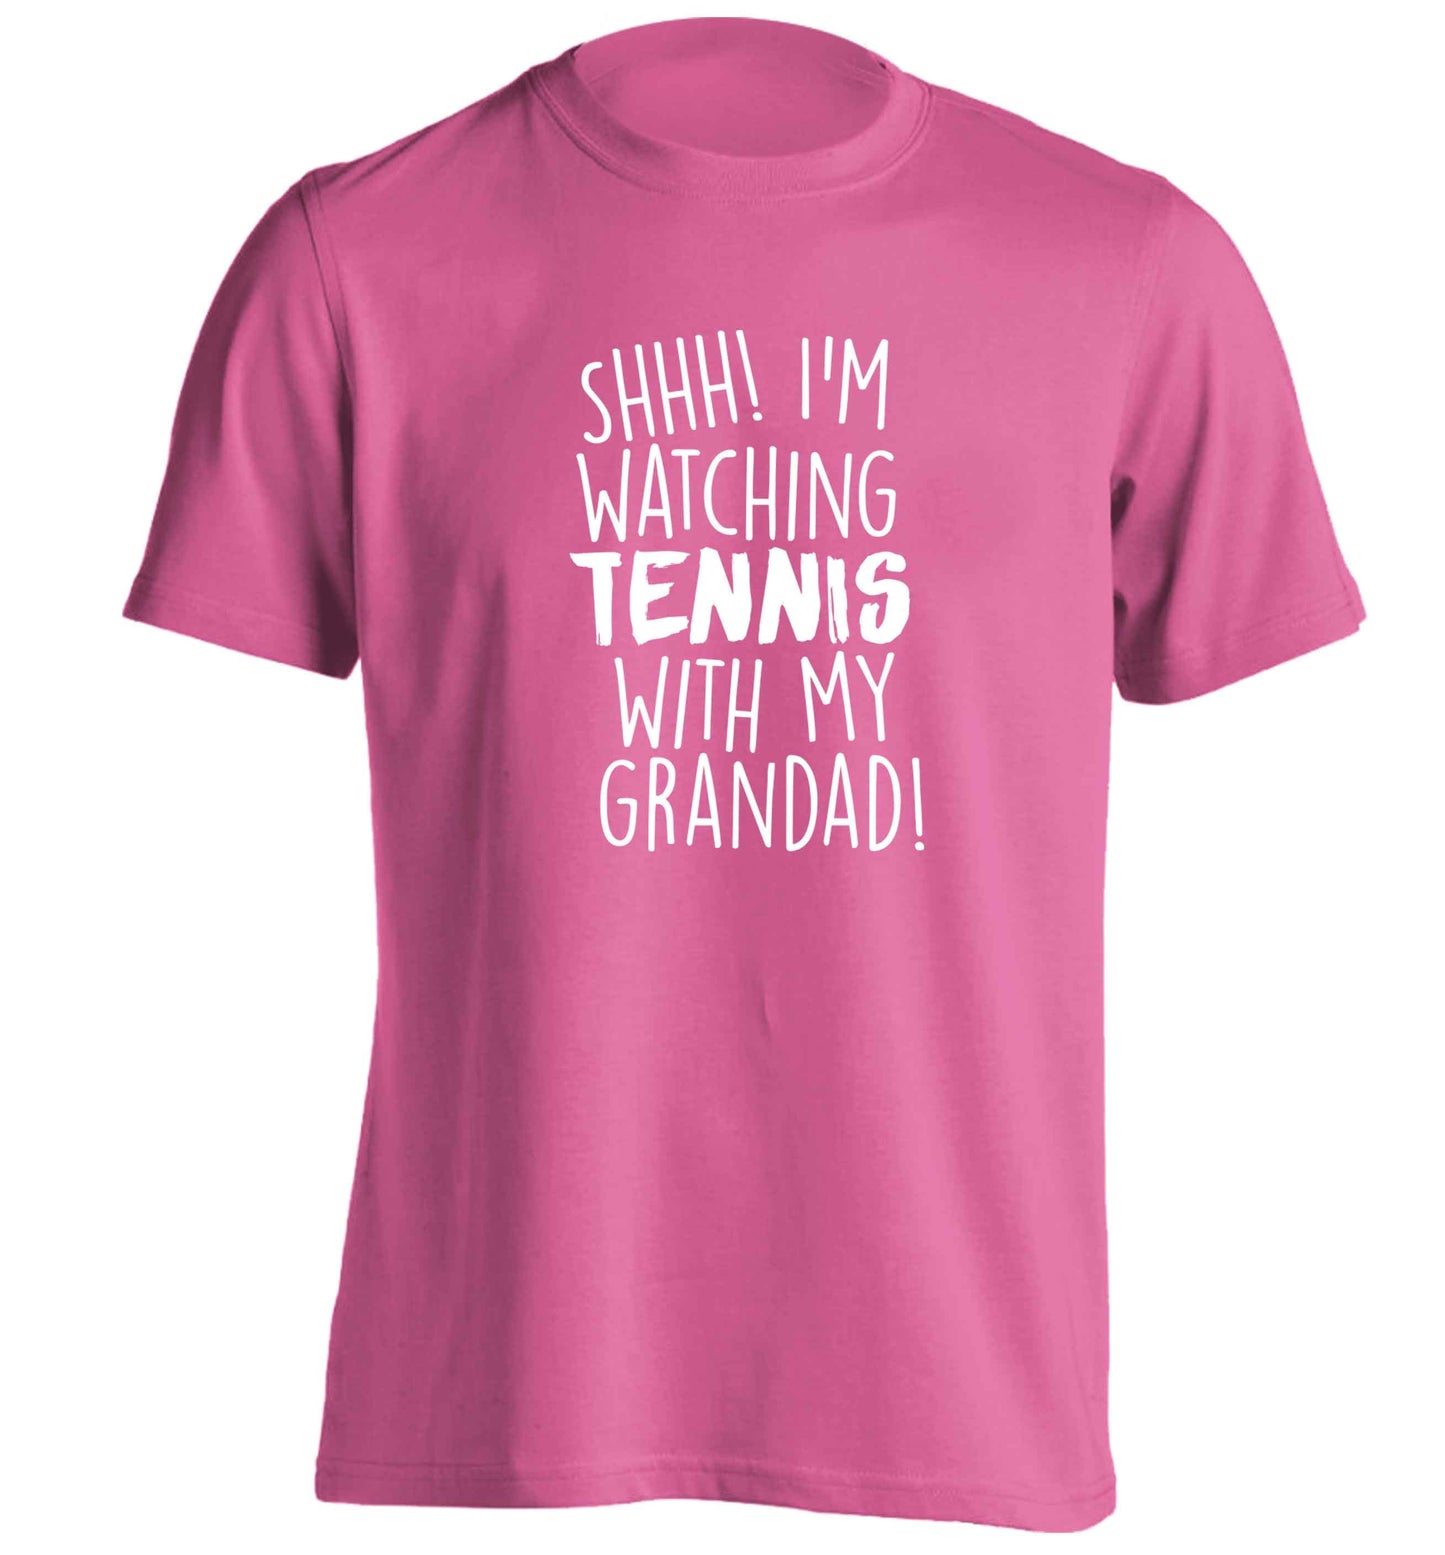 Shh! I'm watching tennis with my grandad! adults unisex pink Tshirt 2XL